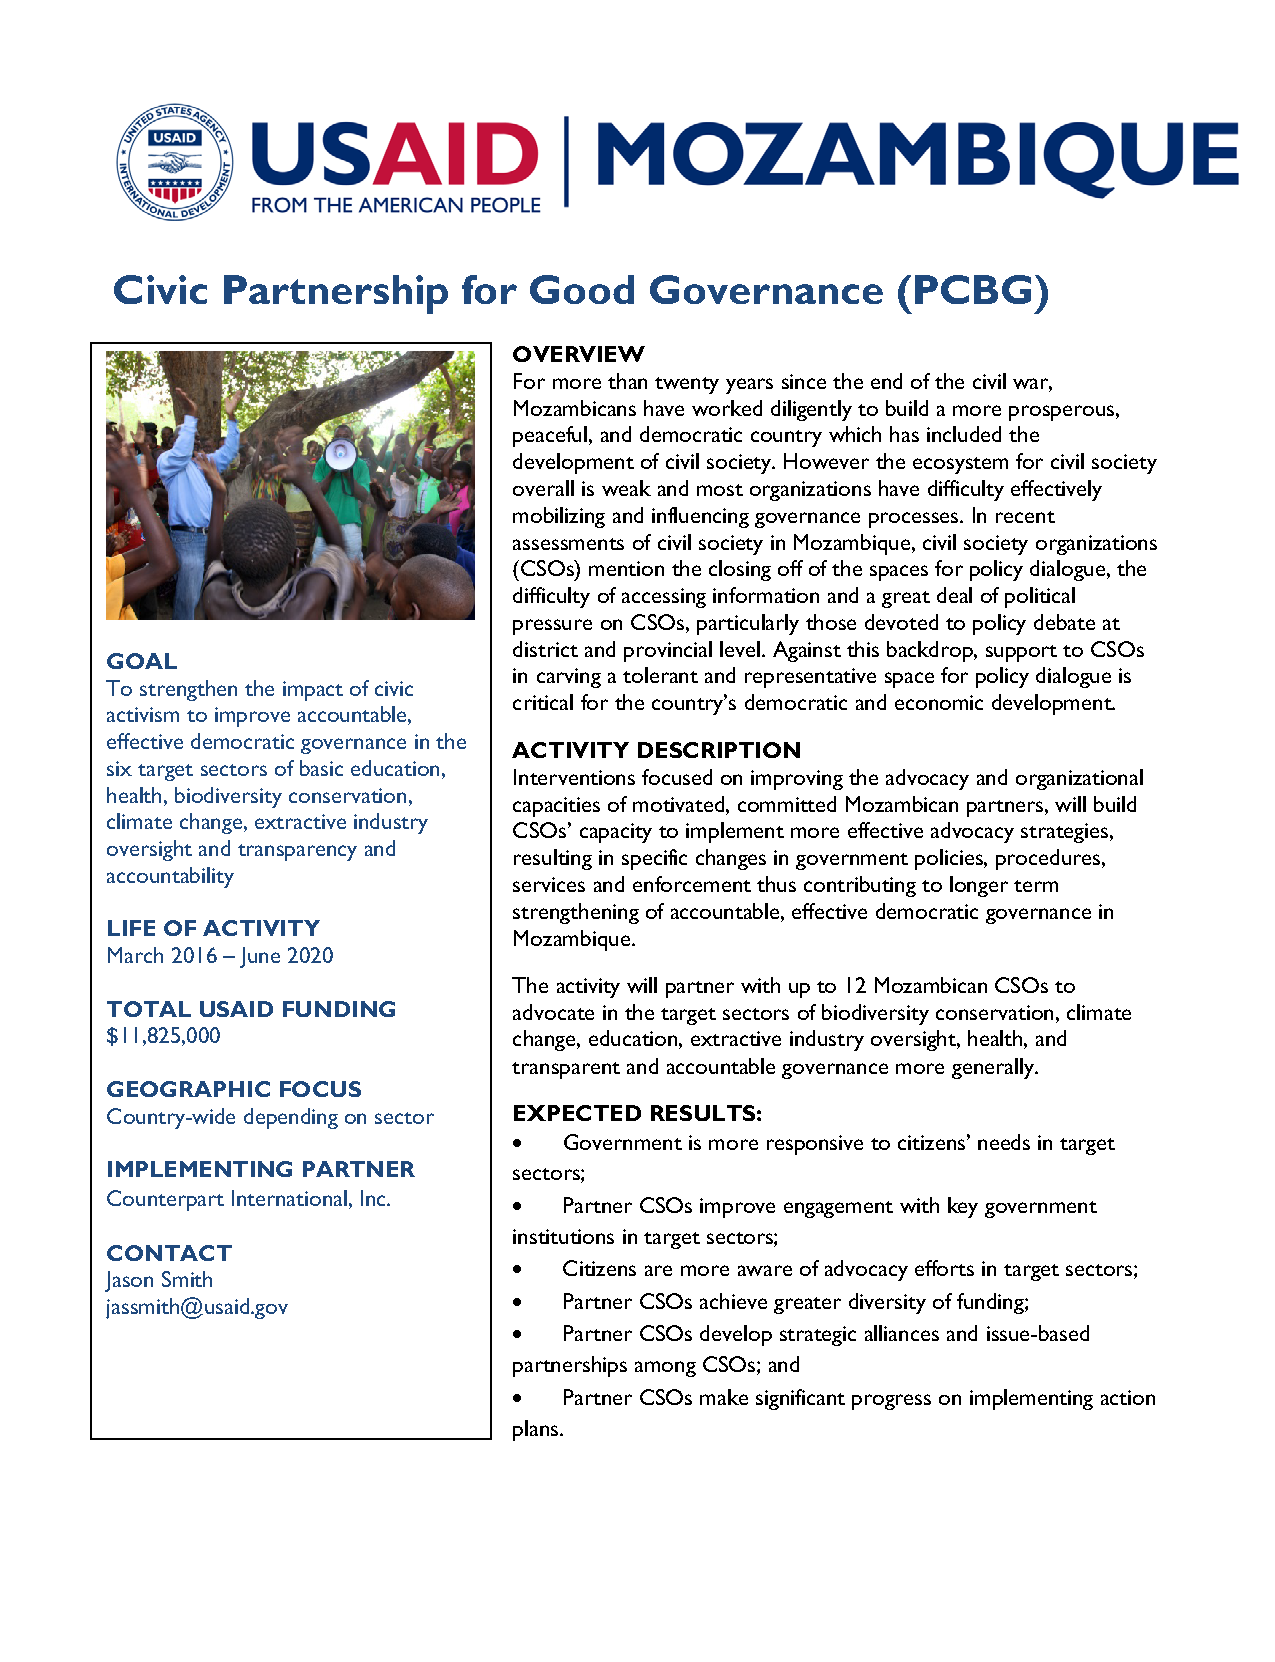 Civic Partnership for Good Governance (PCBG) Fact Sheet